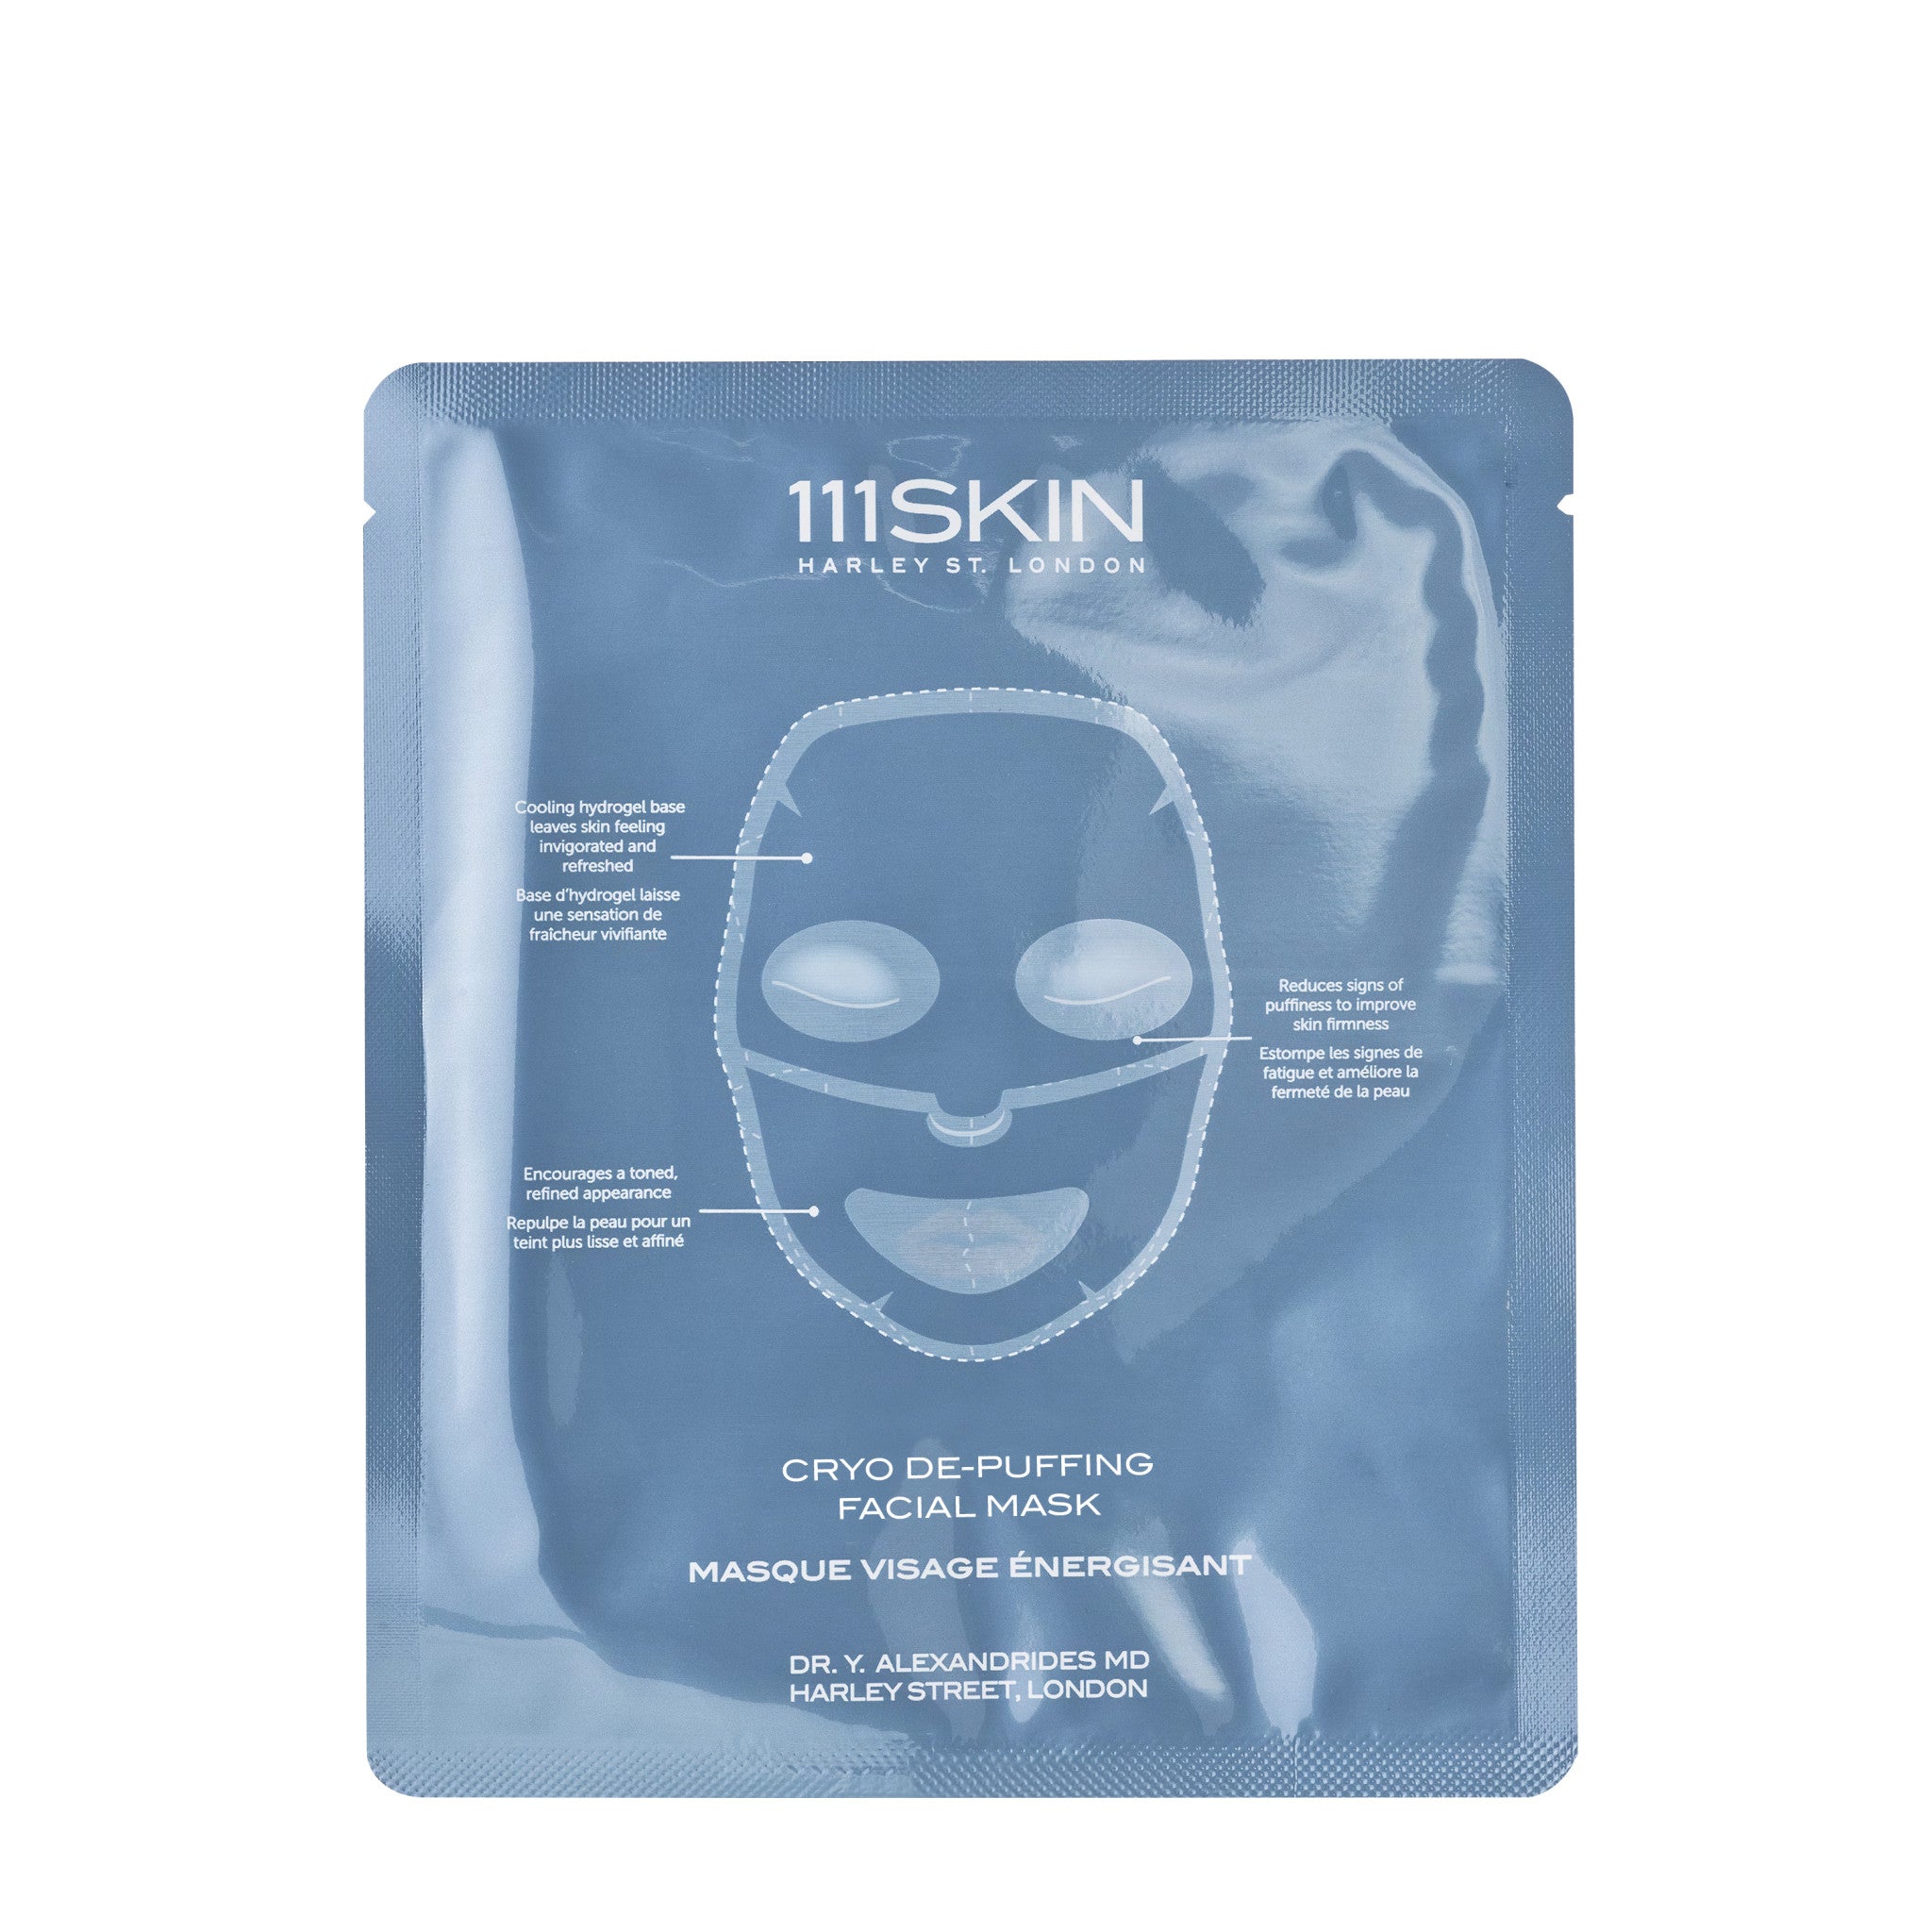 111SKIN Cryo De-Puffing Facial Mask Set Size variant: 5 Treatments main image.